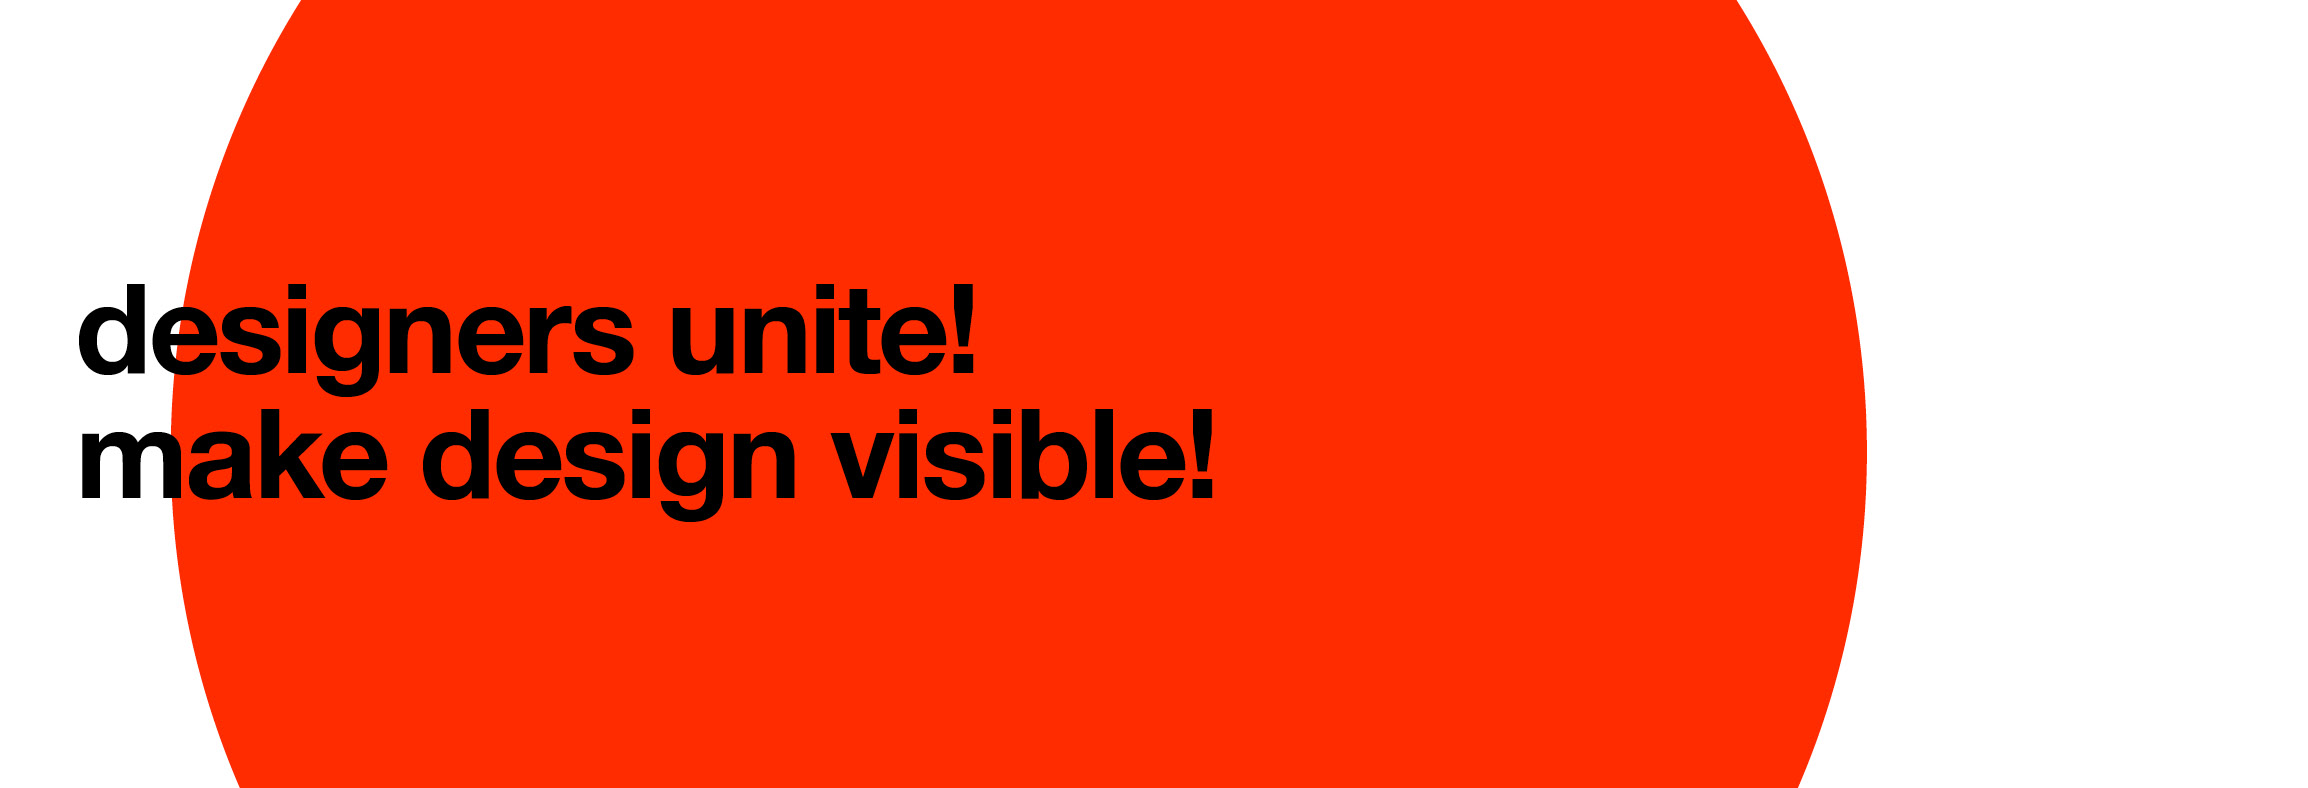 designers unite! make design visible!